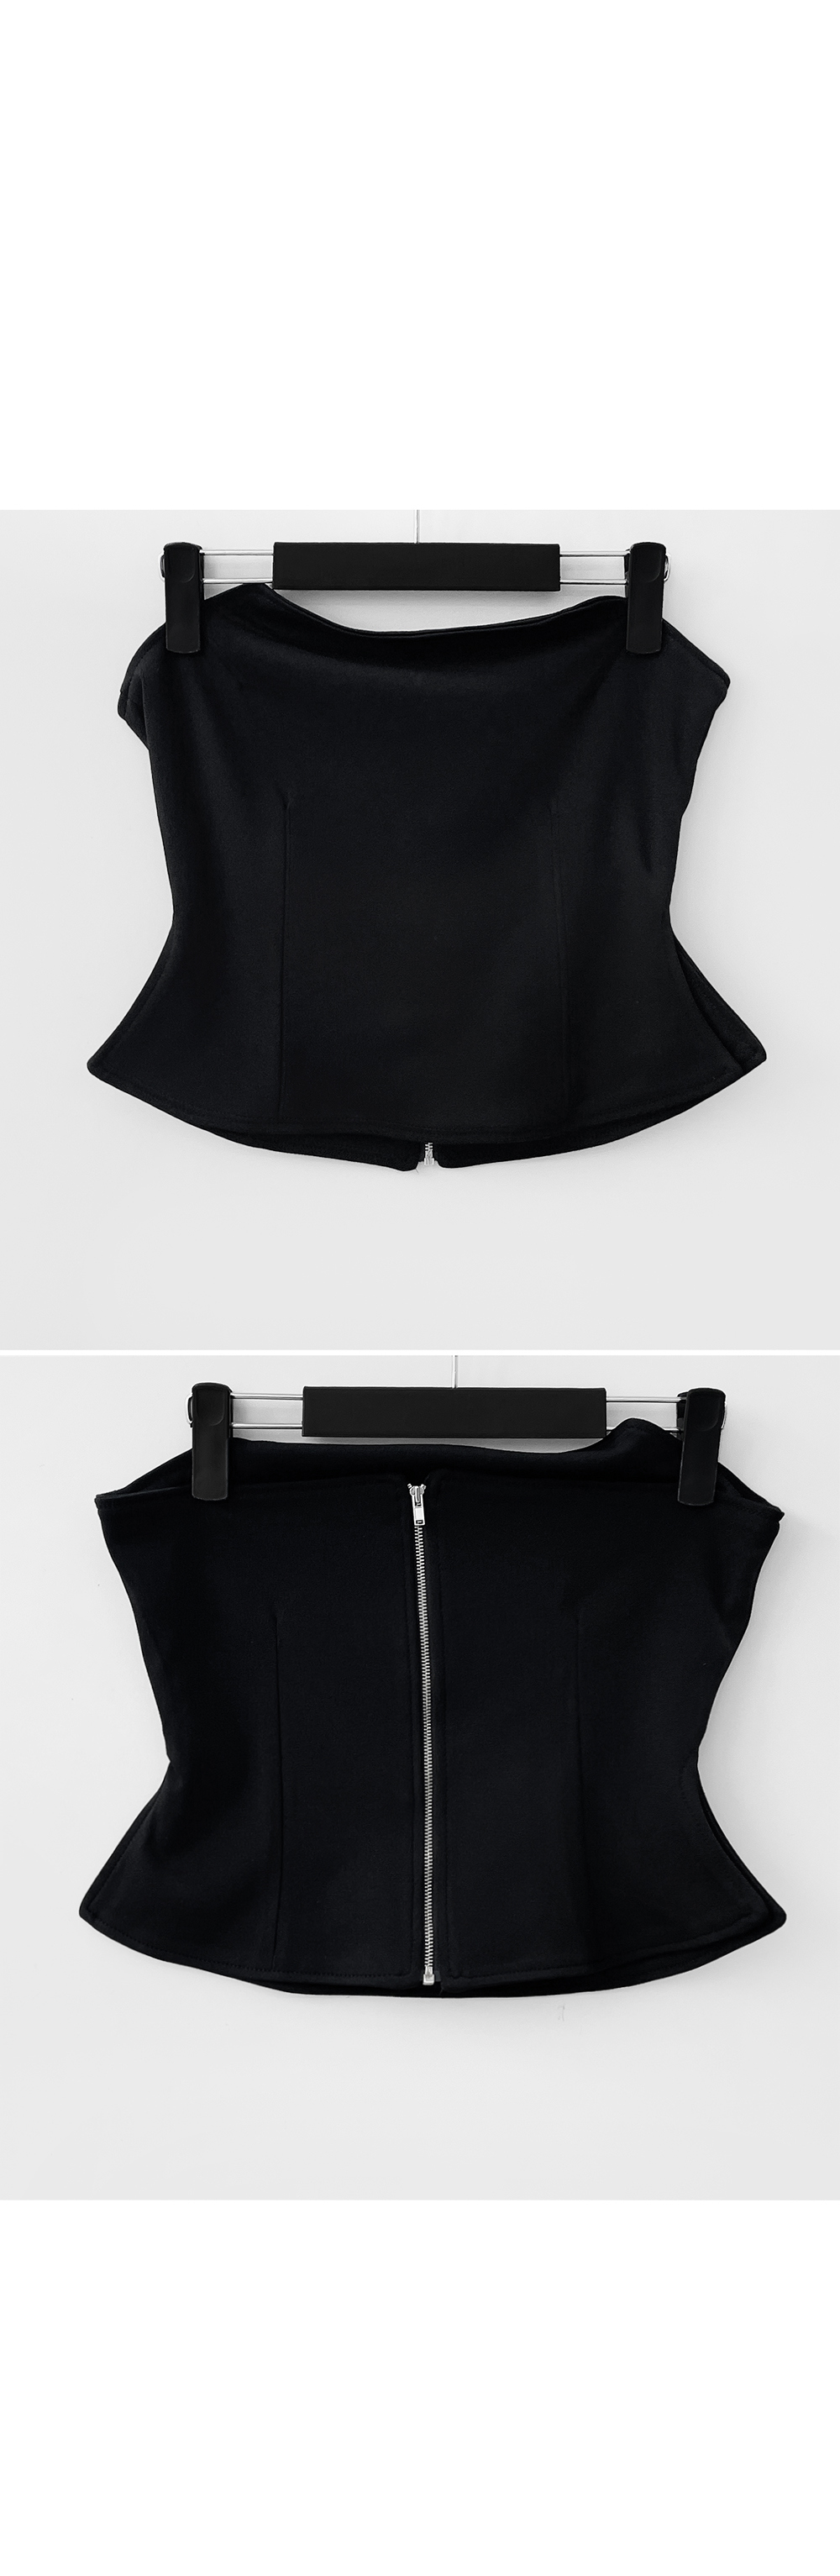 suspenders skirt/pants charcoal color image-S1L10